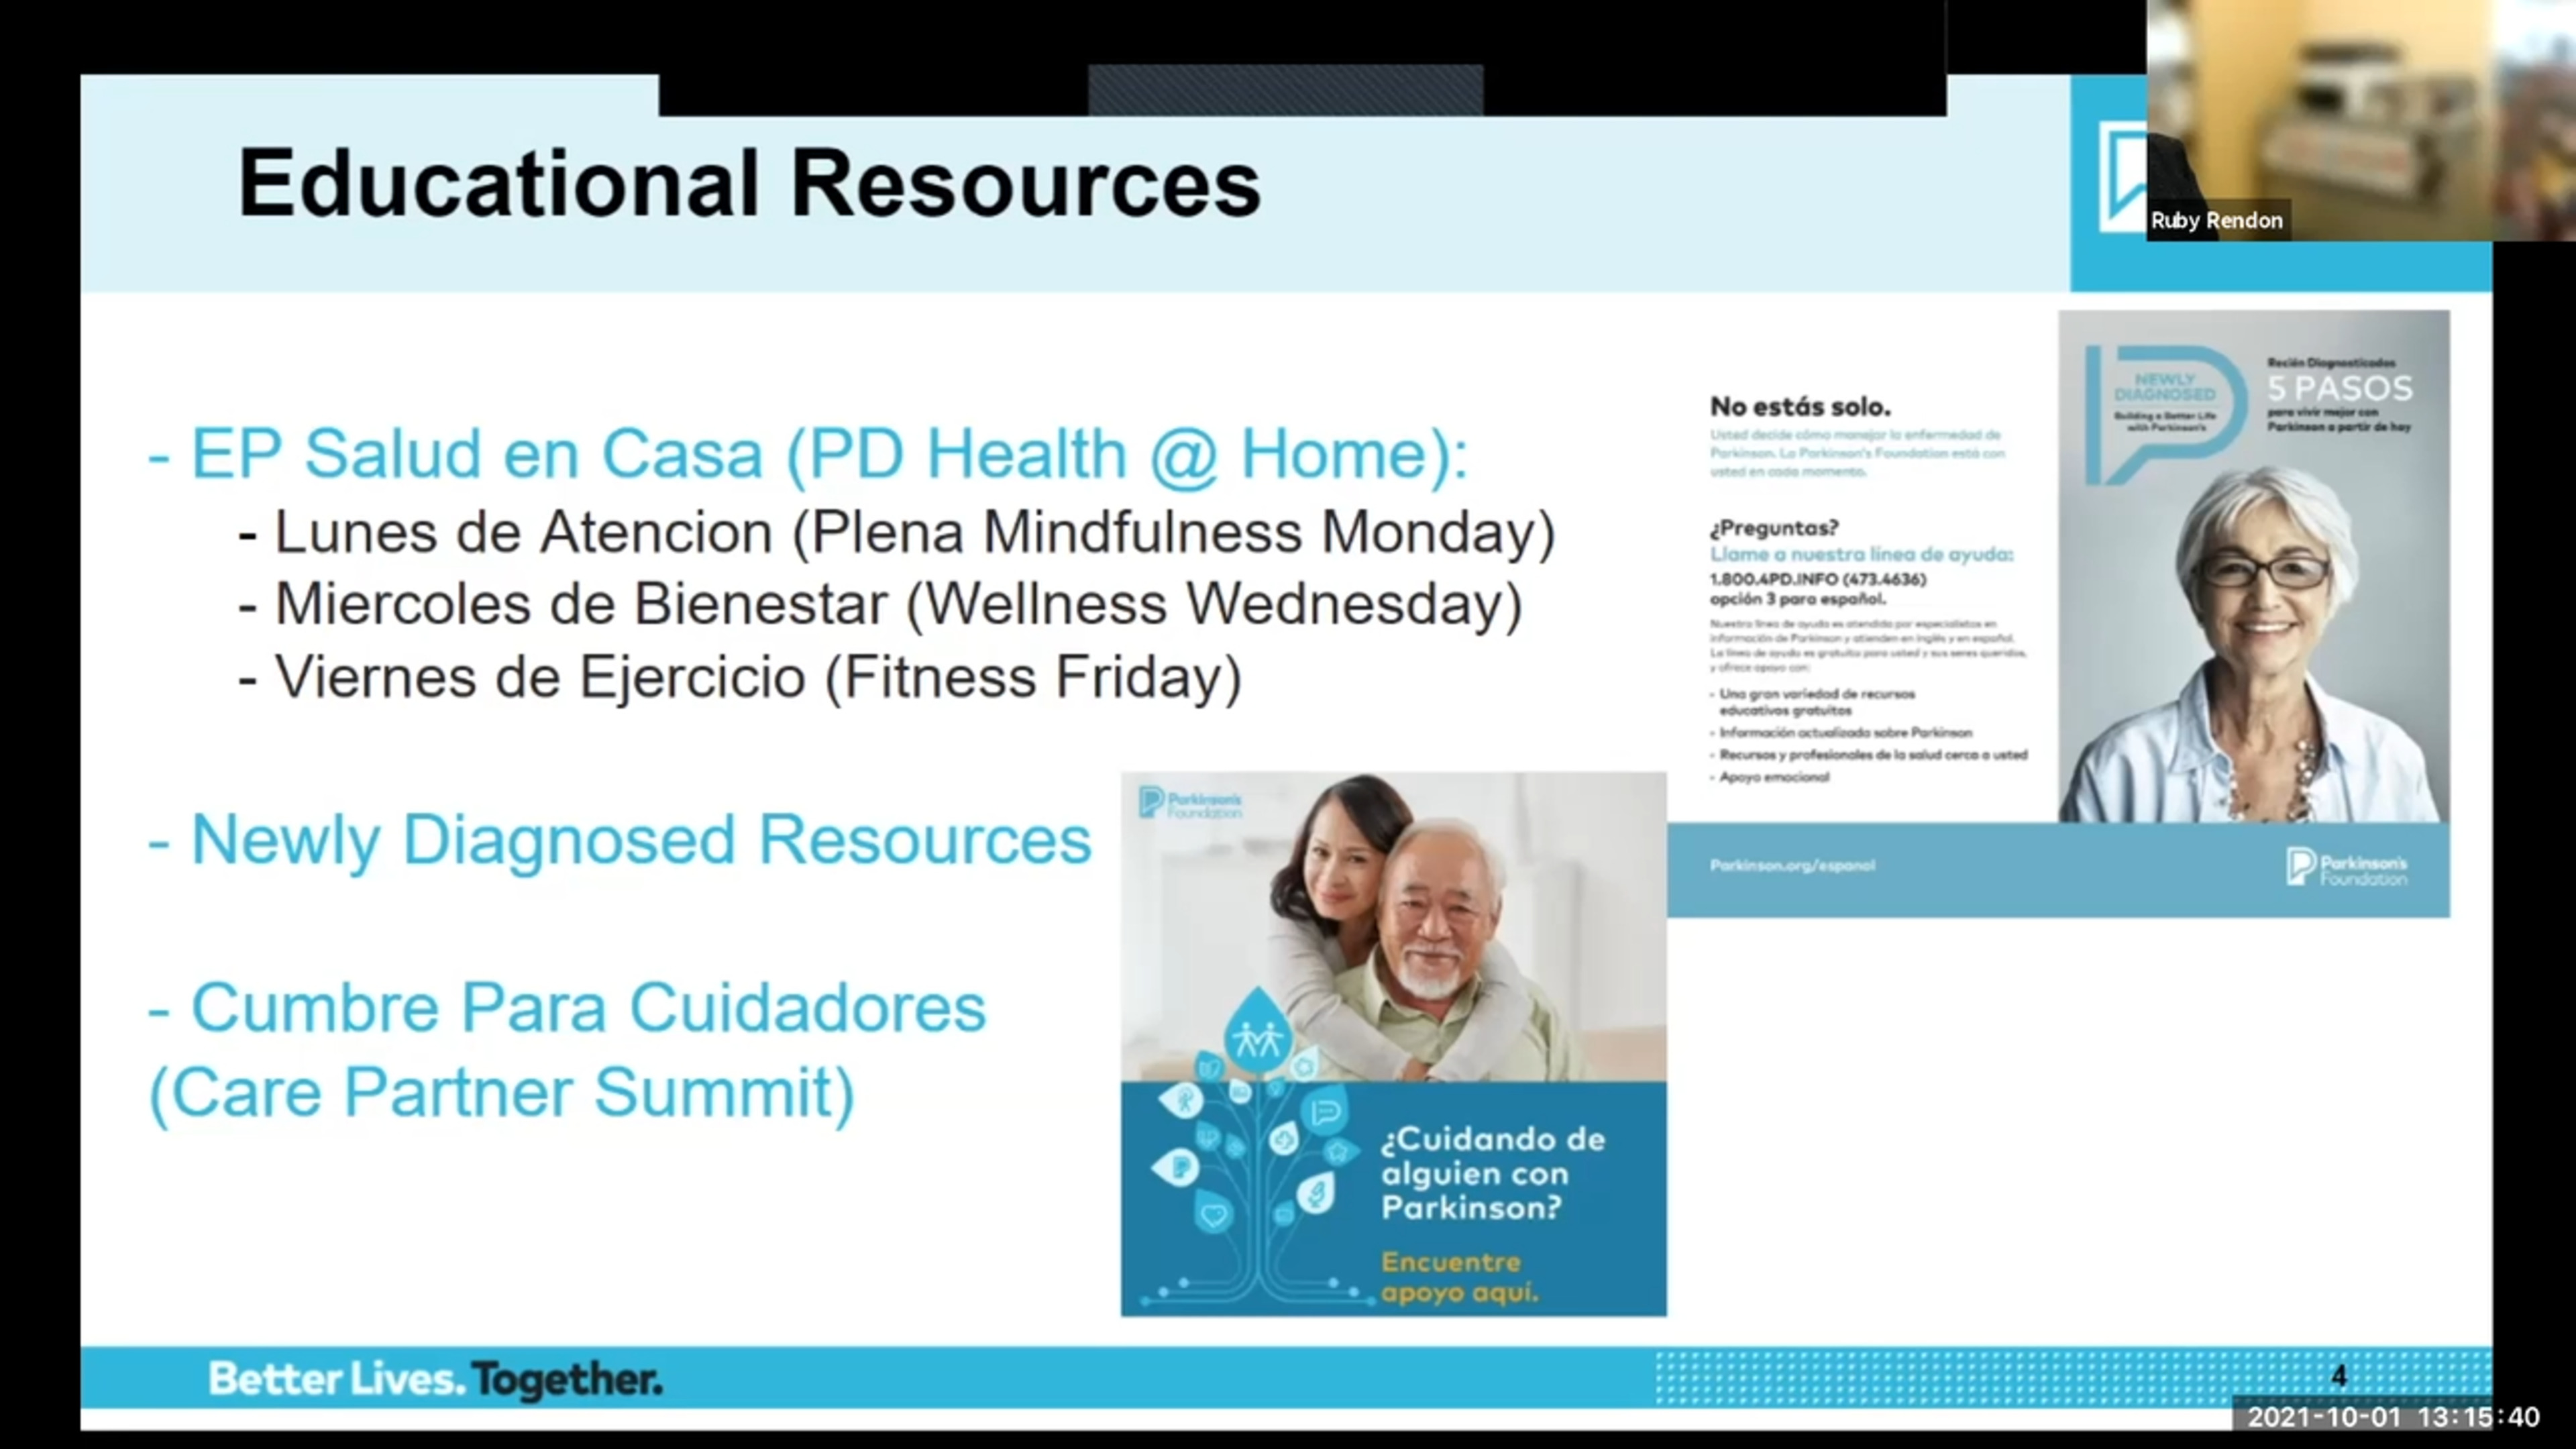 Parkinson’s Foundation Resources in Spanish